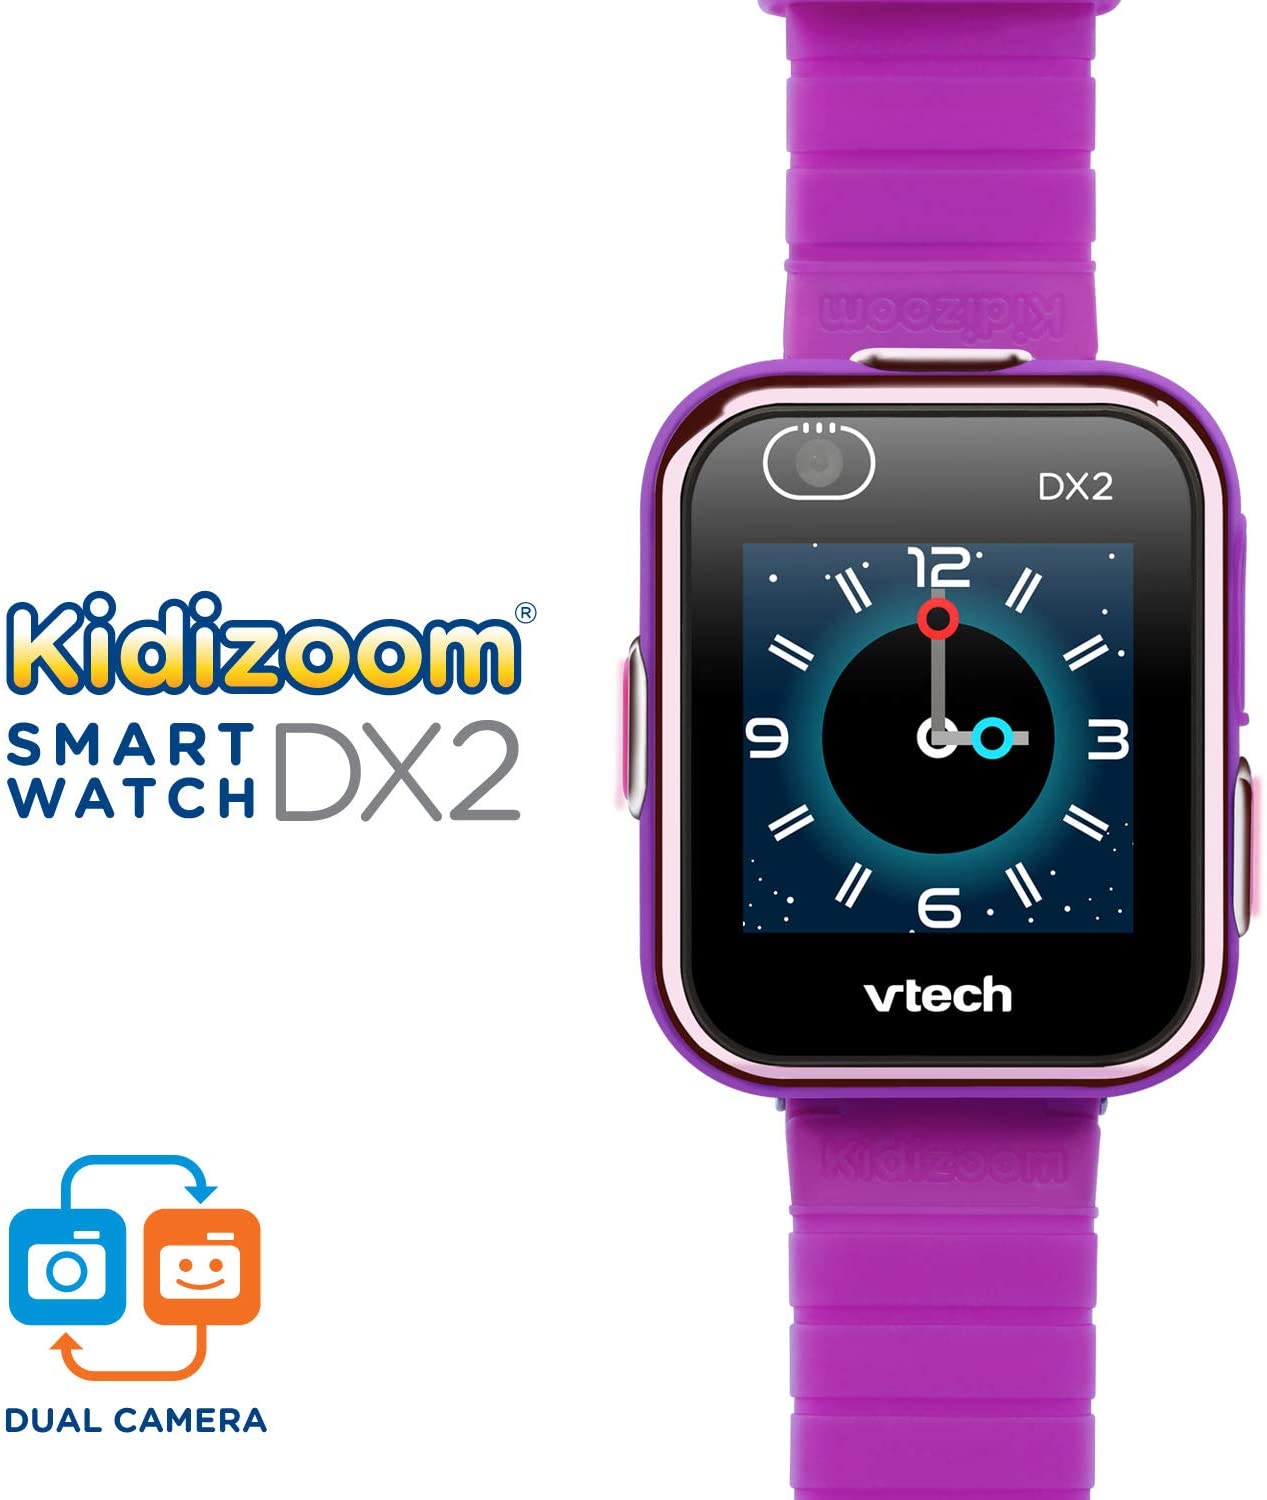 VTech KidiZoom Smartwatch DX2, Purple - Stylish, Kid-Friendly Design